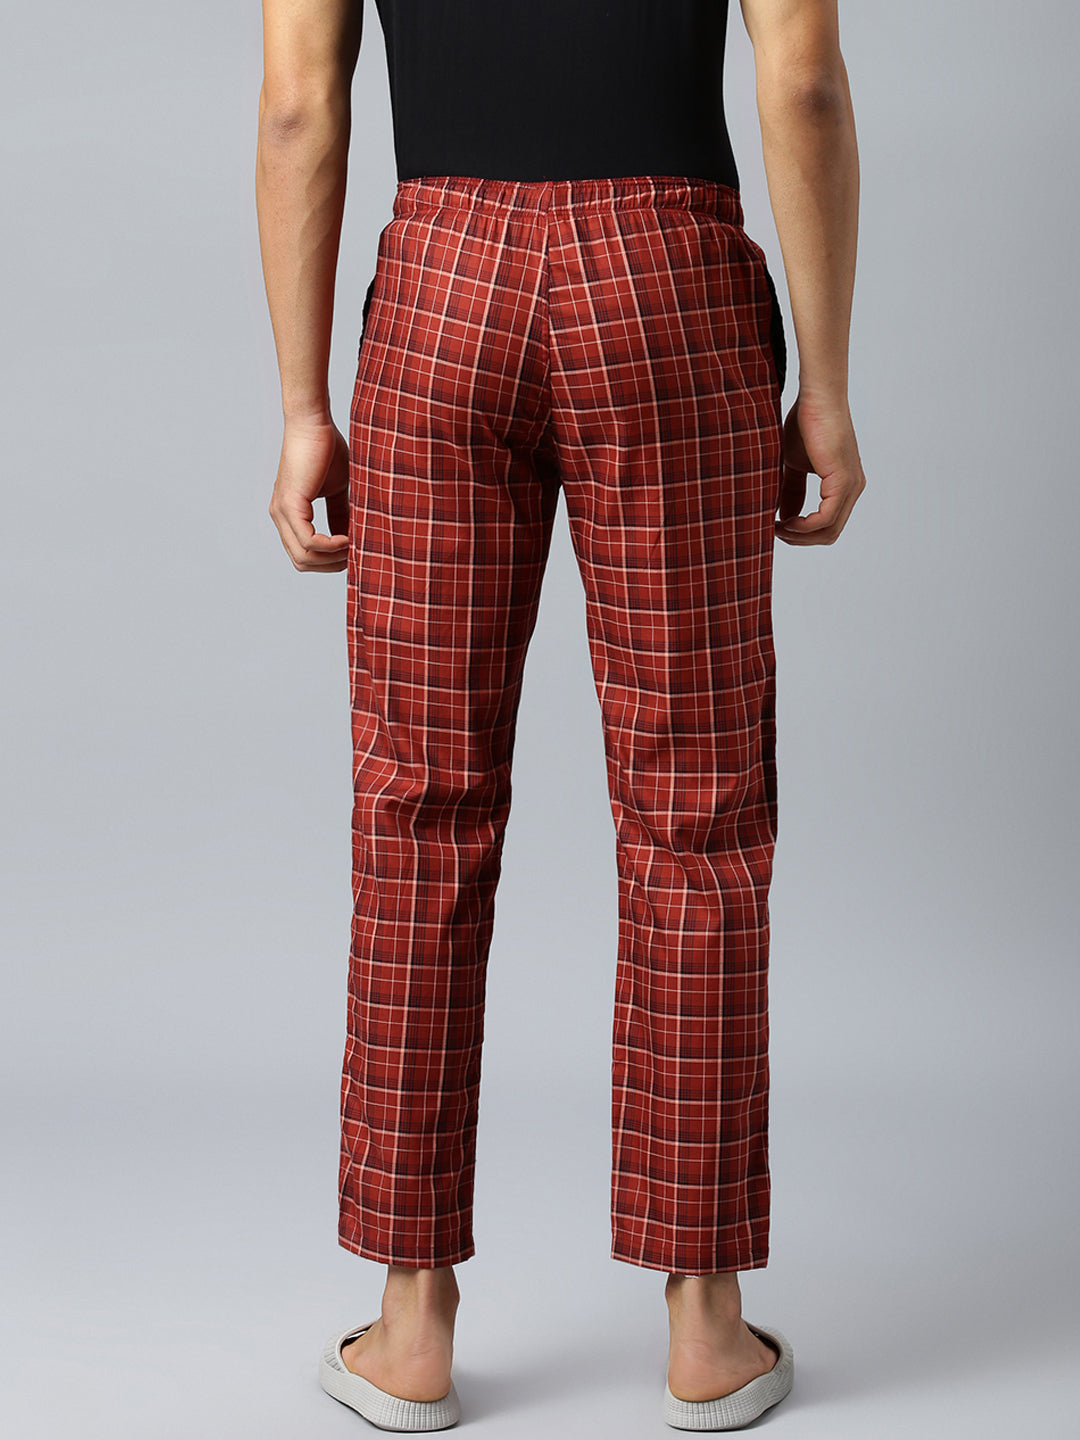 Don Vino Men's Red Lounge Pants With Black & White Checks